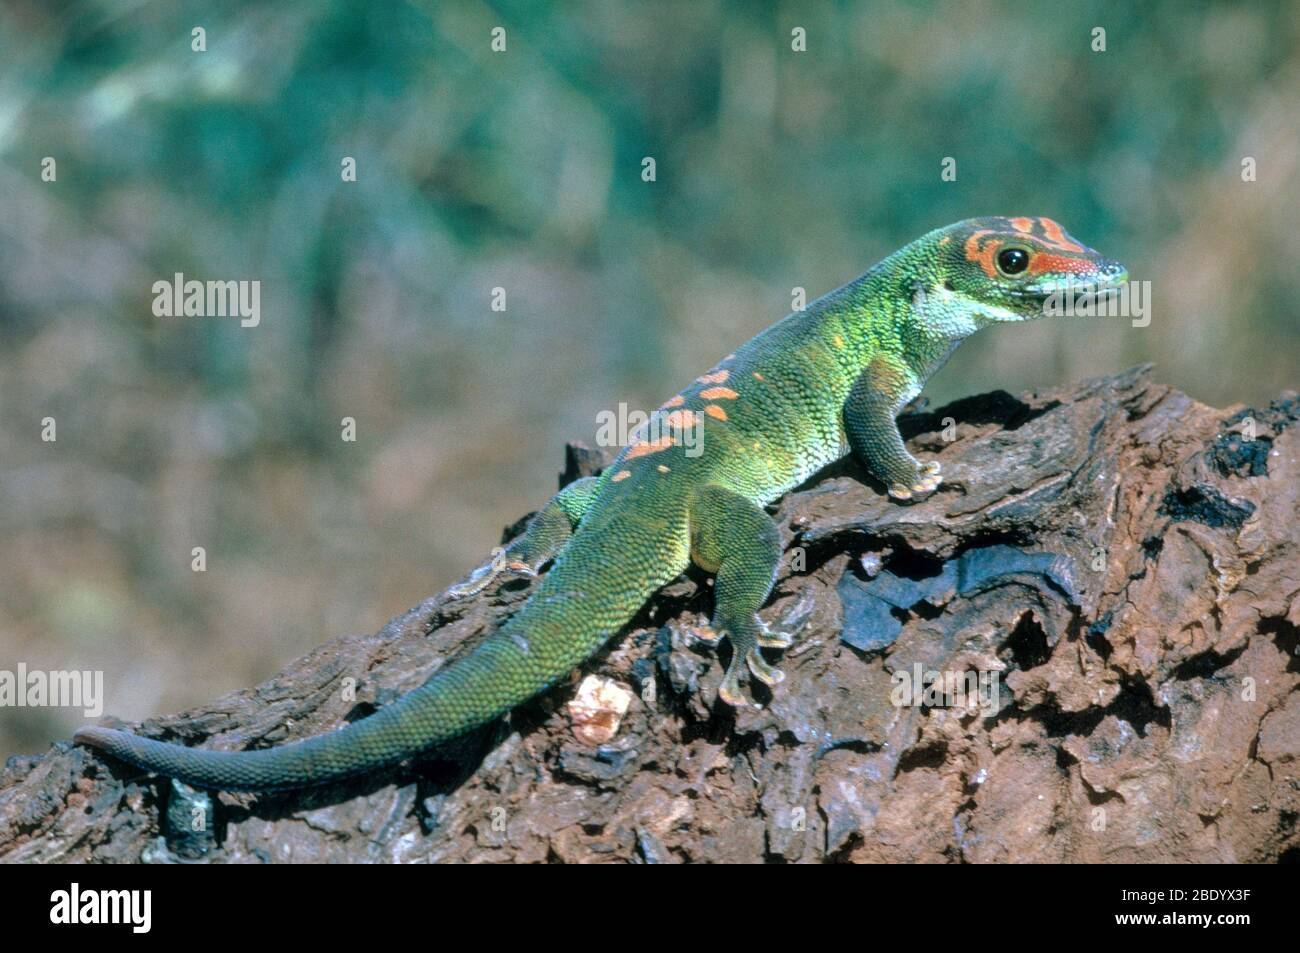 Madagascar Day Gecko Stock Photo